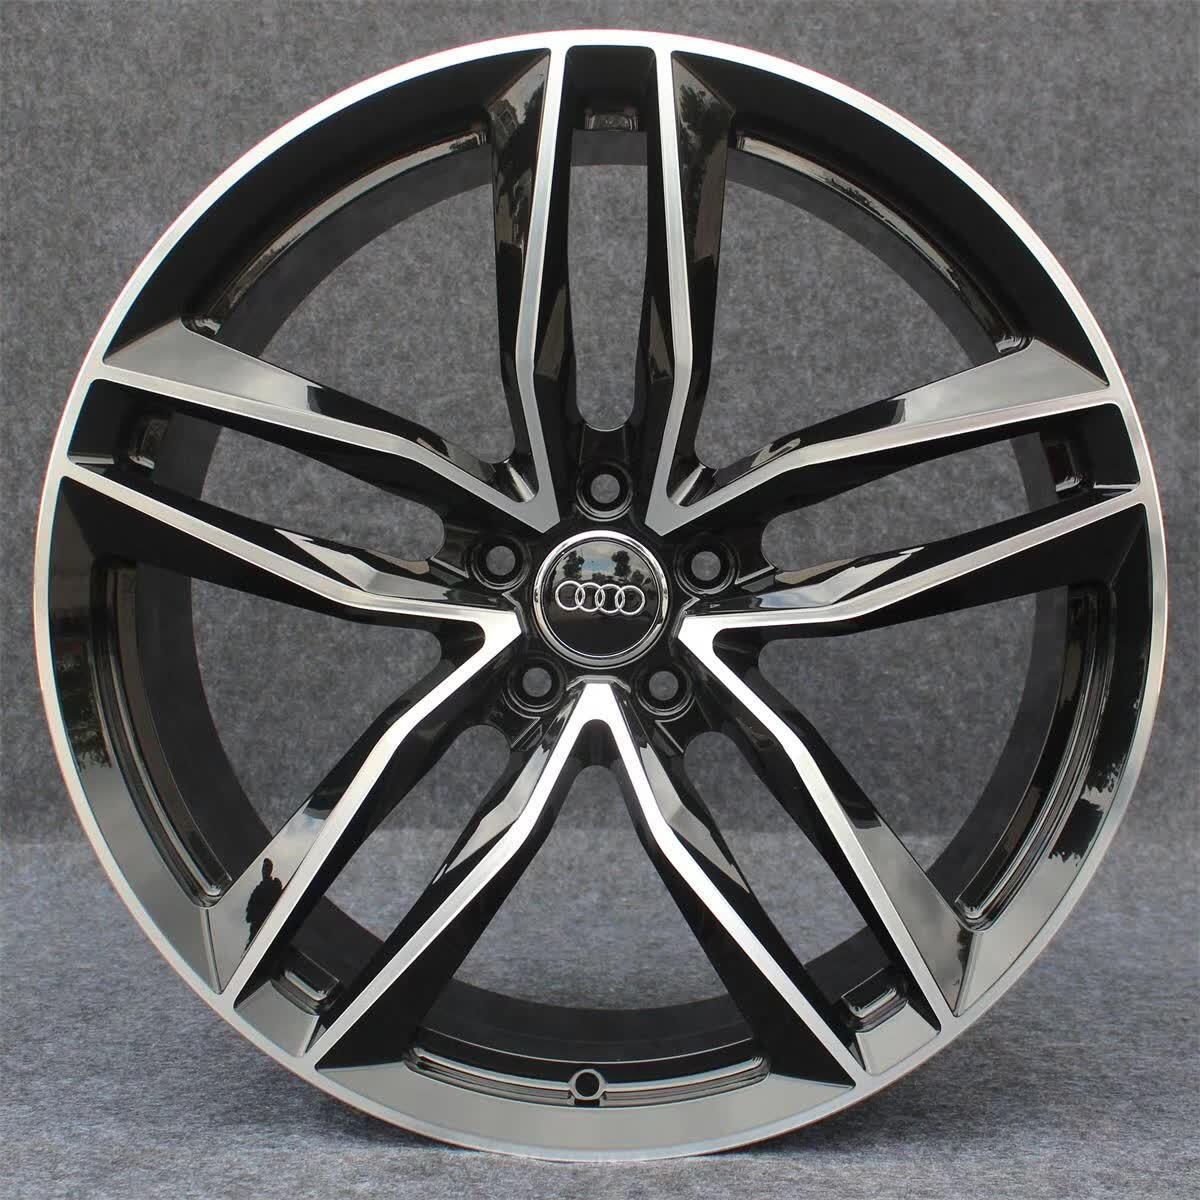 AUDI A7 19 inch wheels